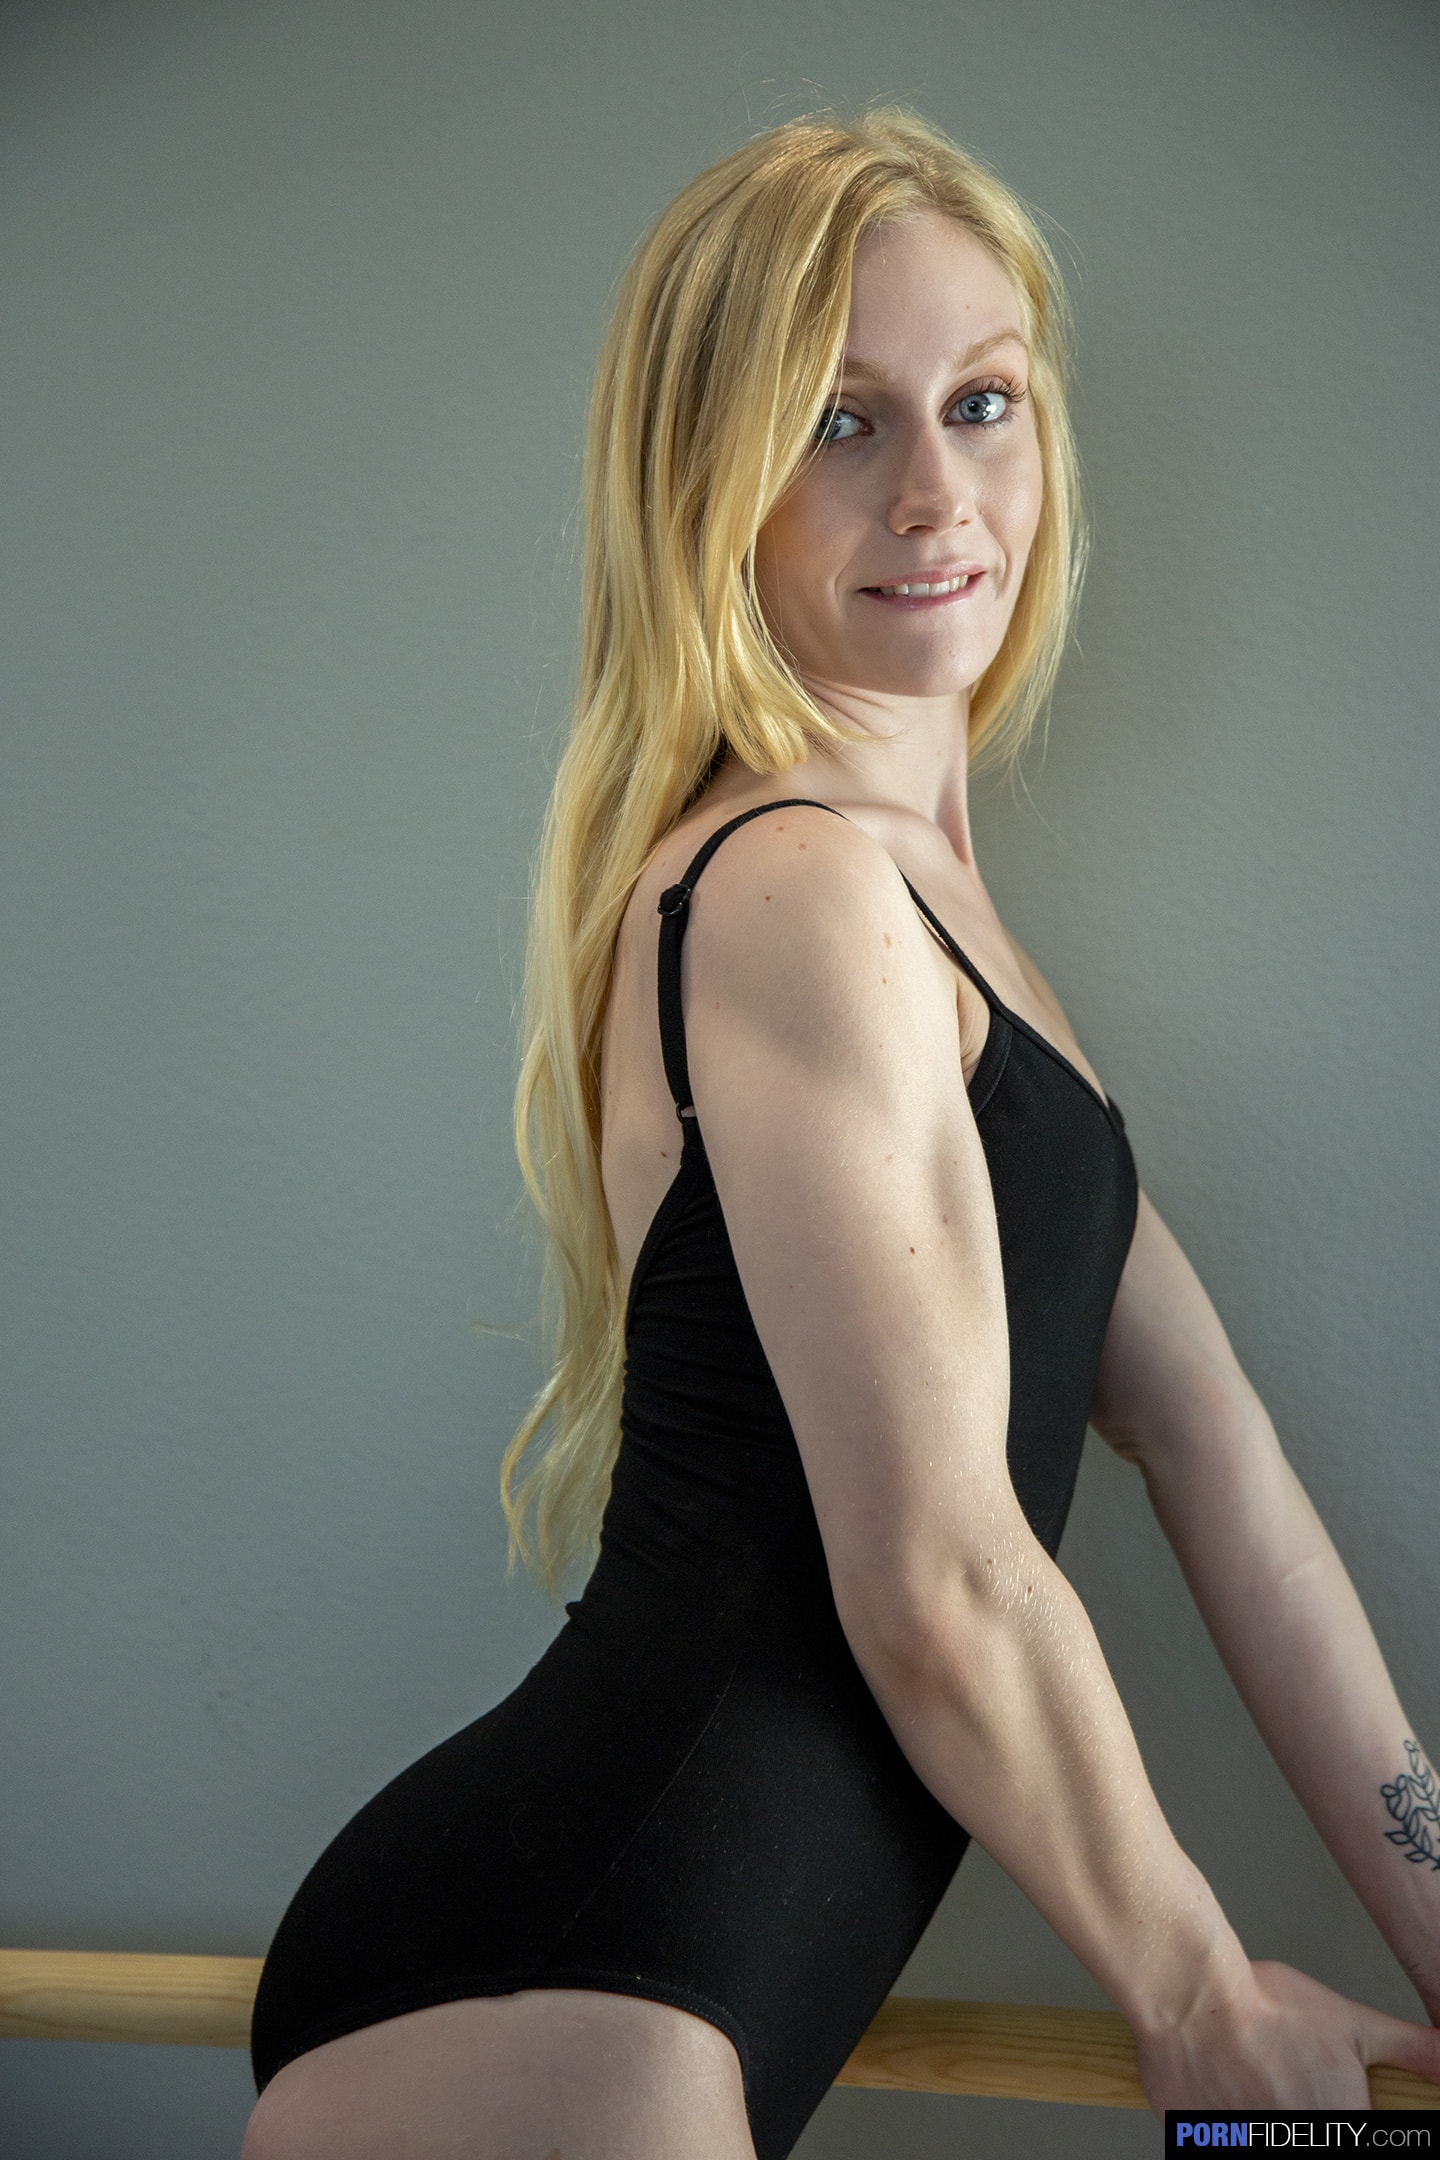 Porn Fidelity 'Blonde Ballerina' starring Emma Starletto (Photo 28)